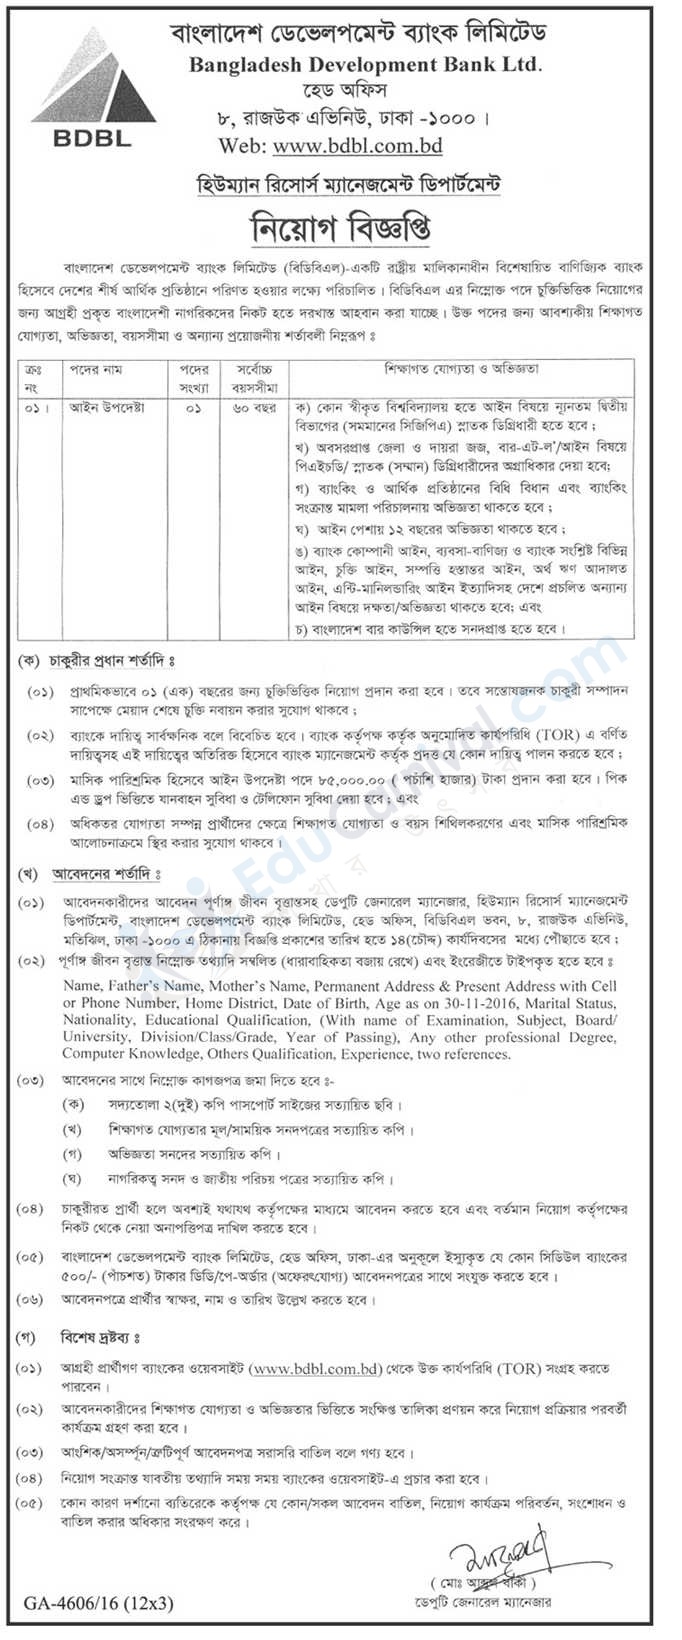 Bangladesh Development Bank Limited Circular 2016